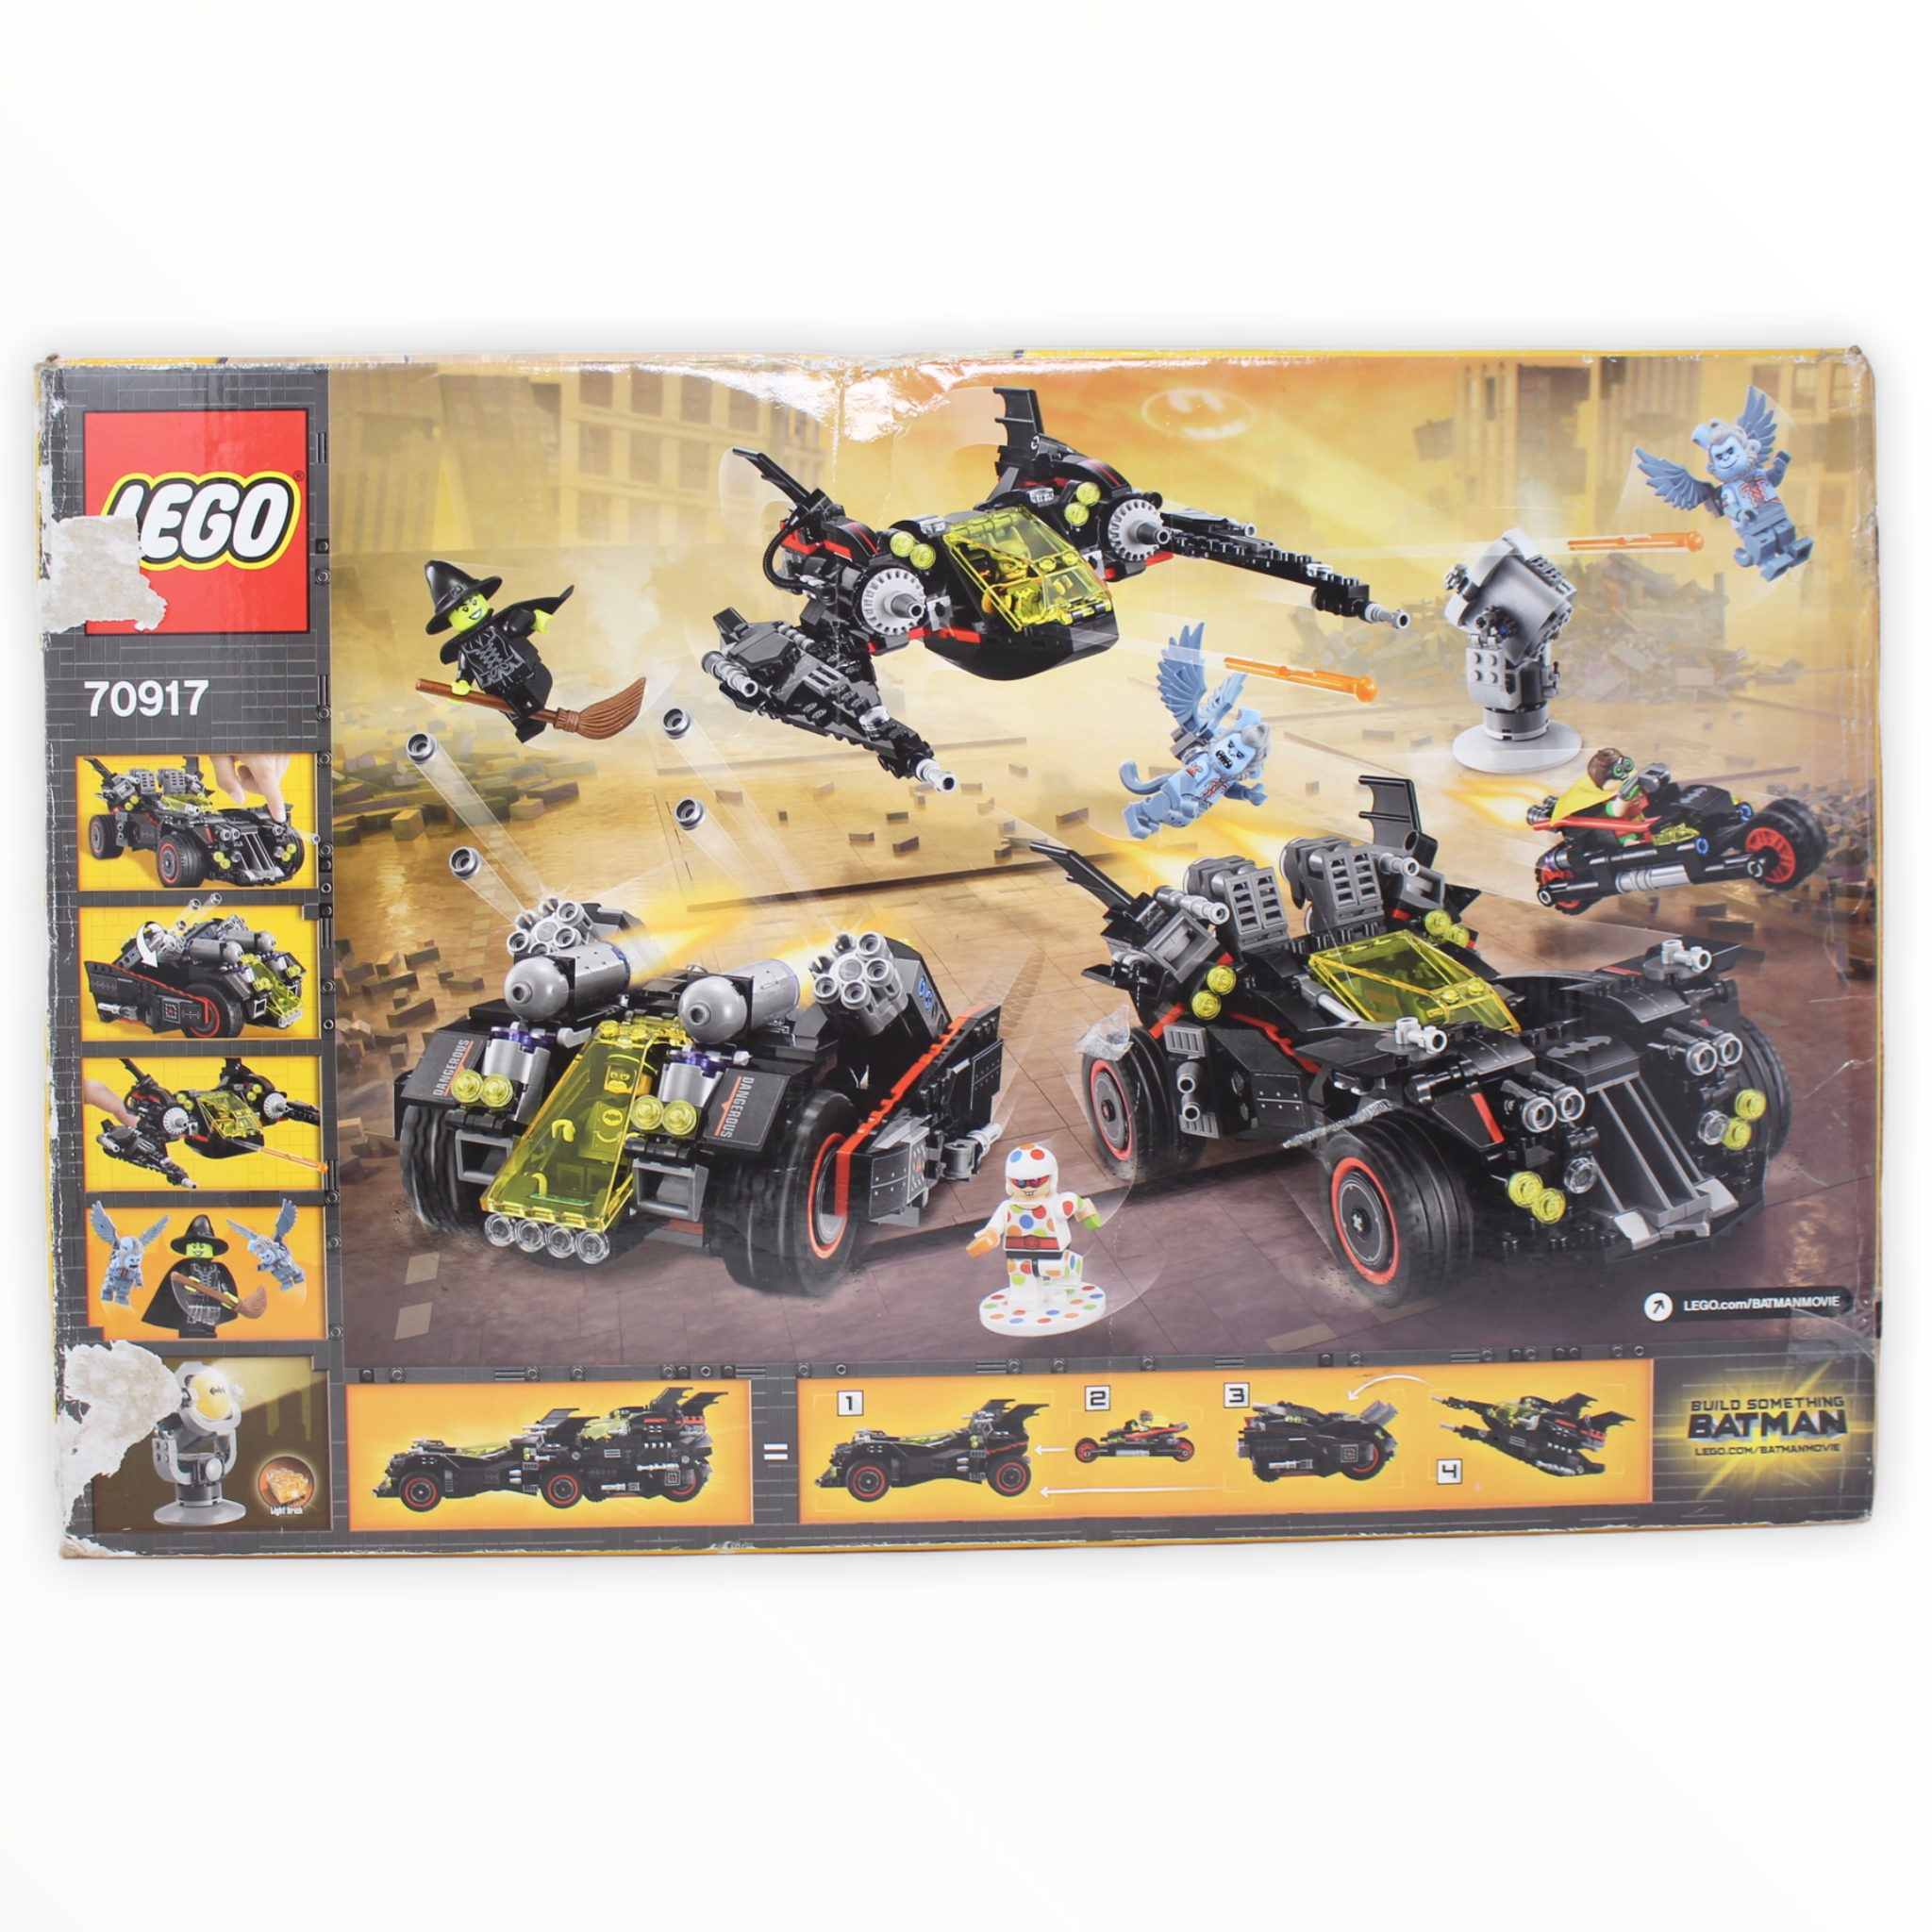 Certified Used Set 70917 LEGO Batman Movie The Ultimate Batmobile